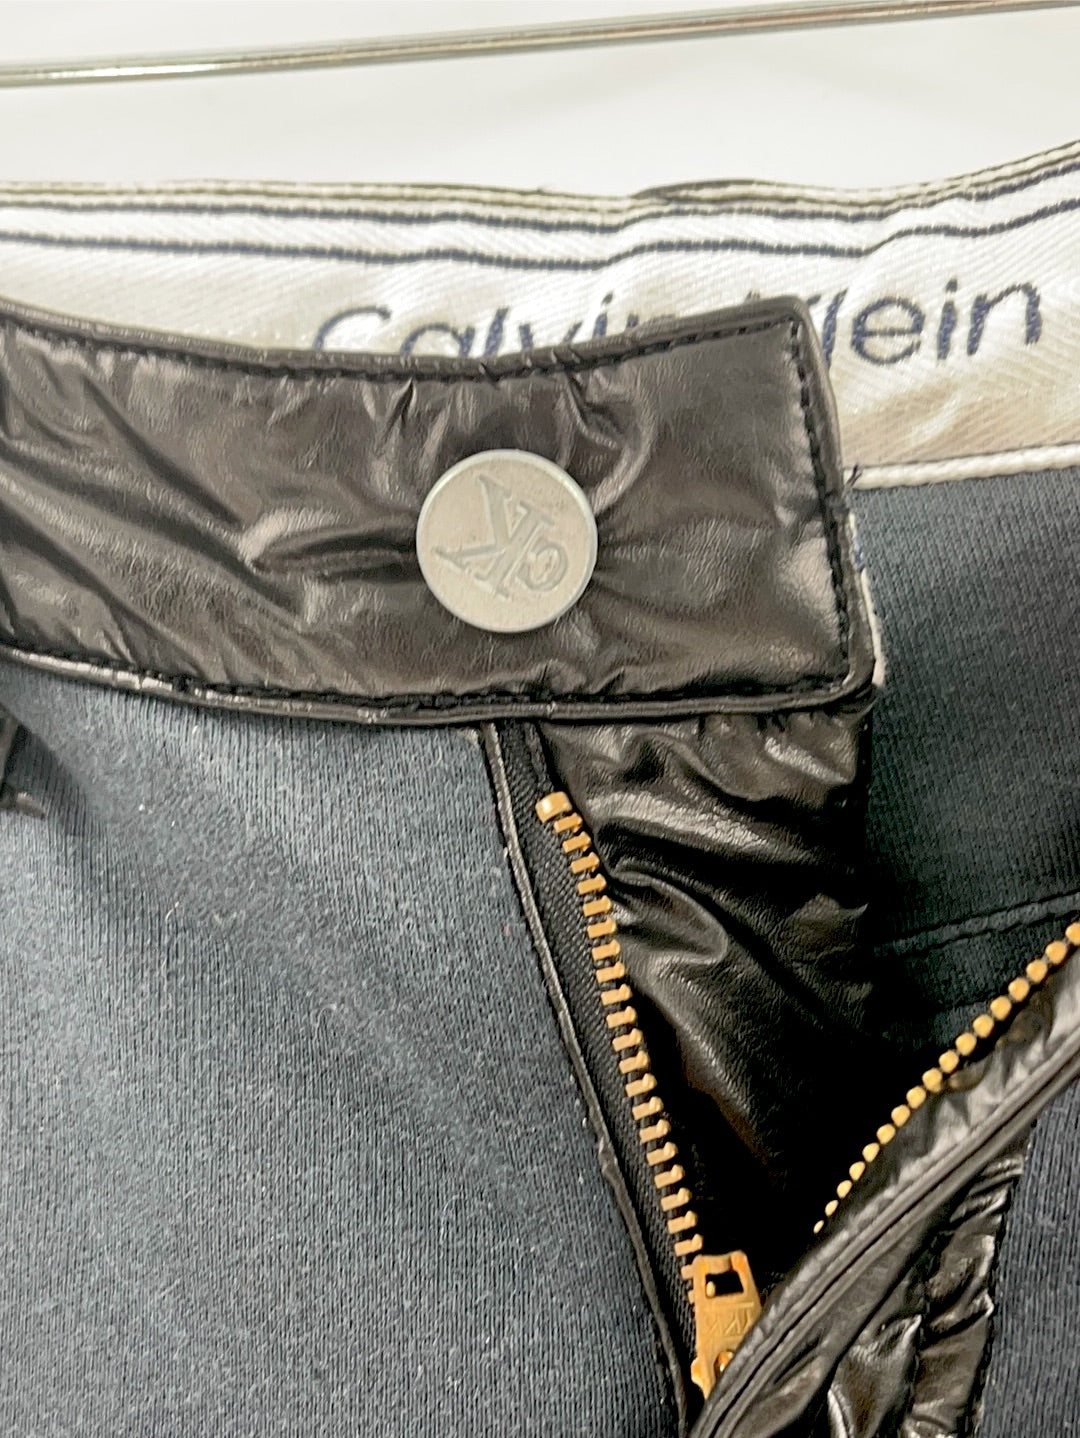 Vintage Calvin Klein Vinyl Hot Pants *Ultra Rare* (Size 10)